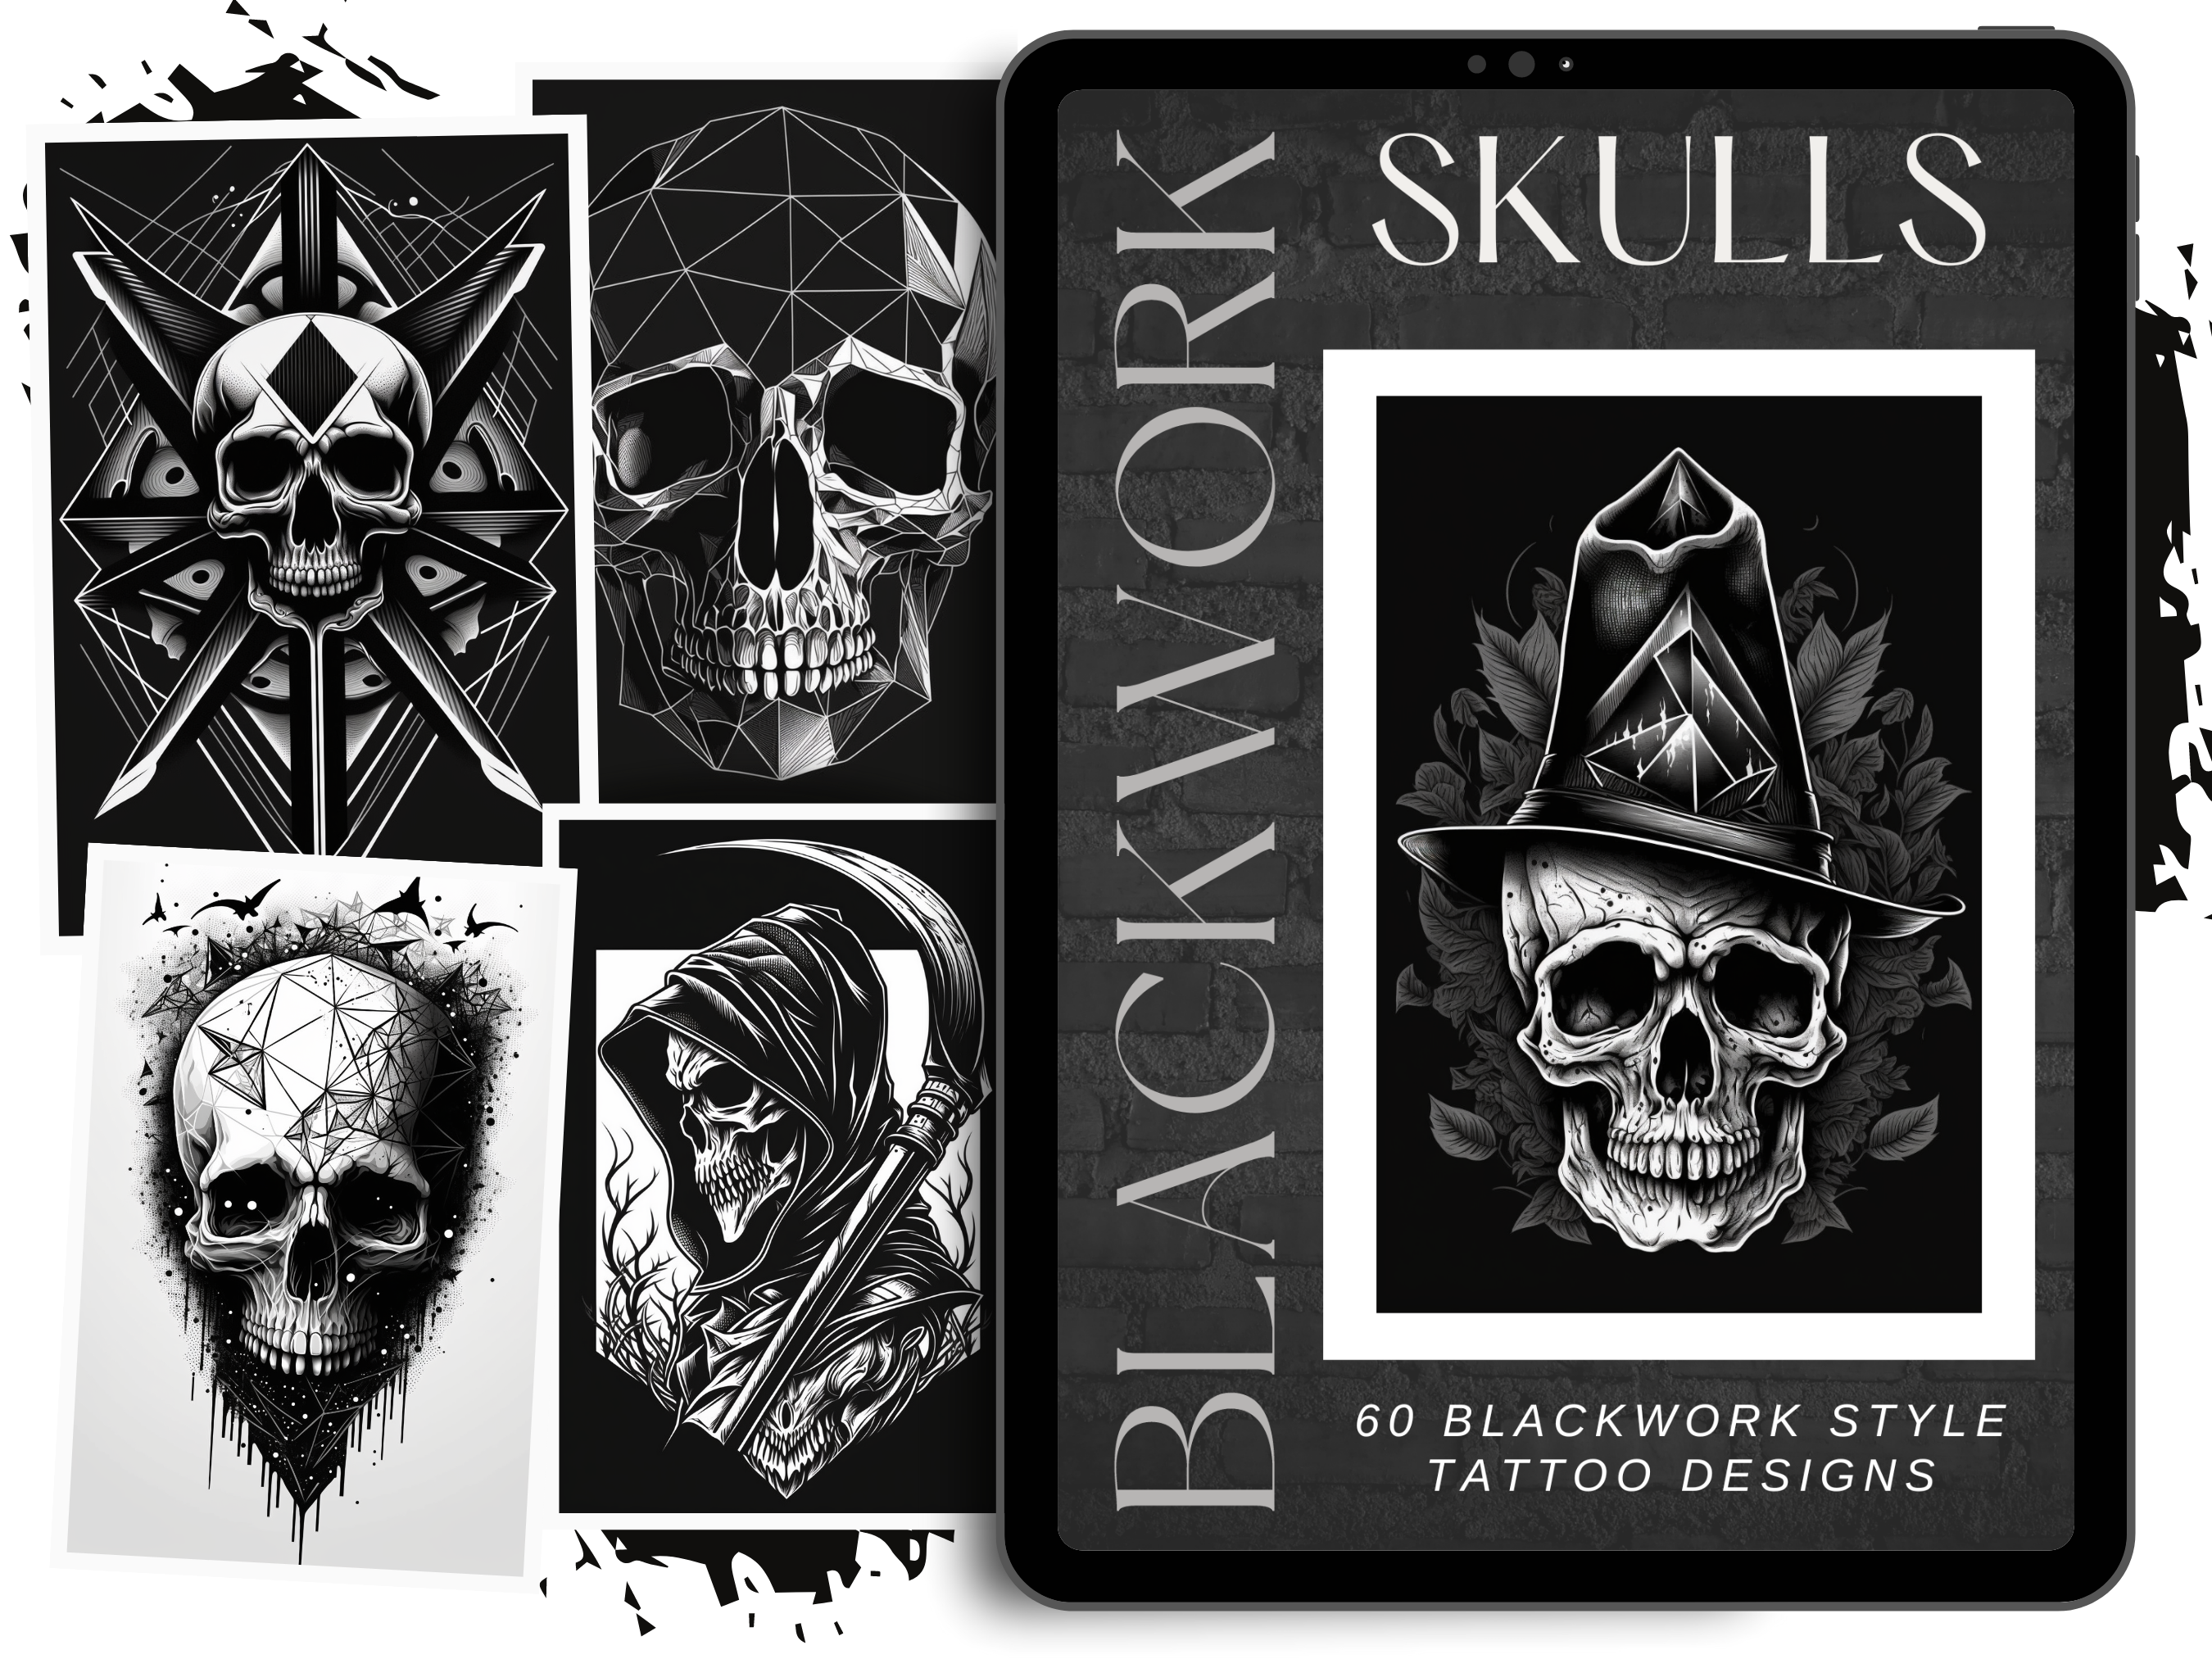 Tibetan Skulls Tattoo Designs by Horimouja - Drawing Reference Flash Book |  eBay